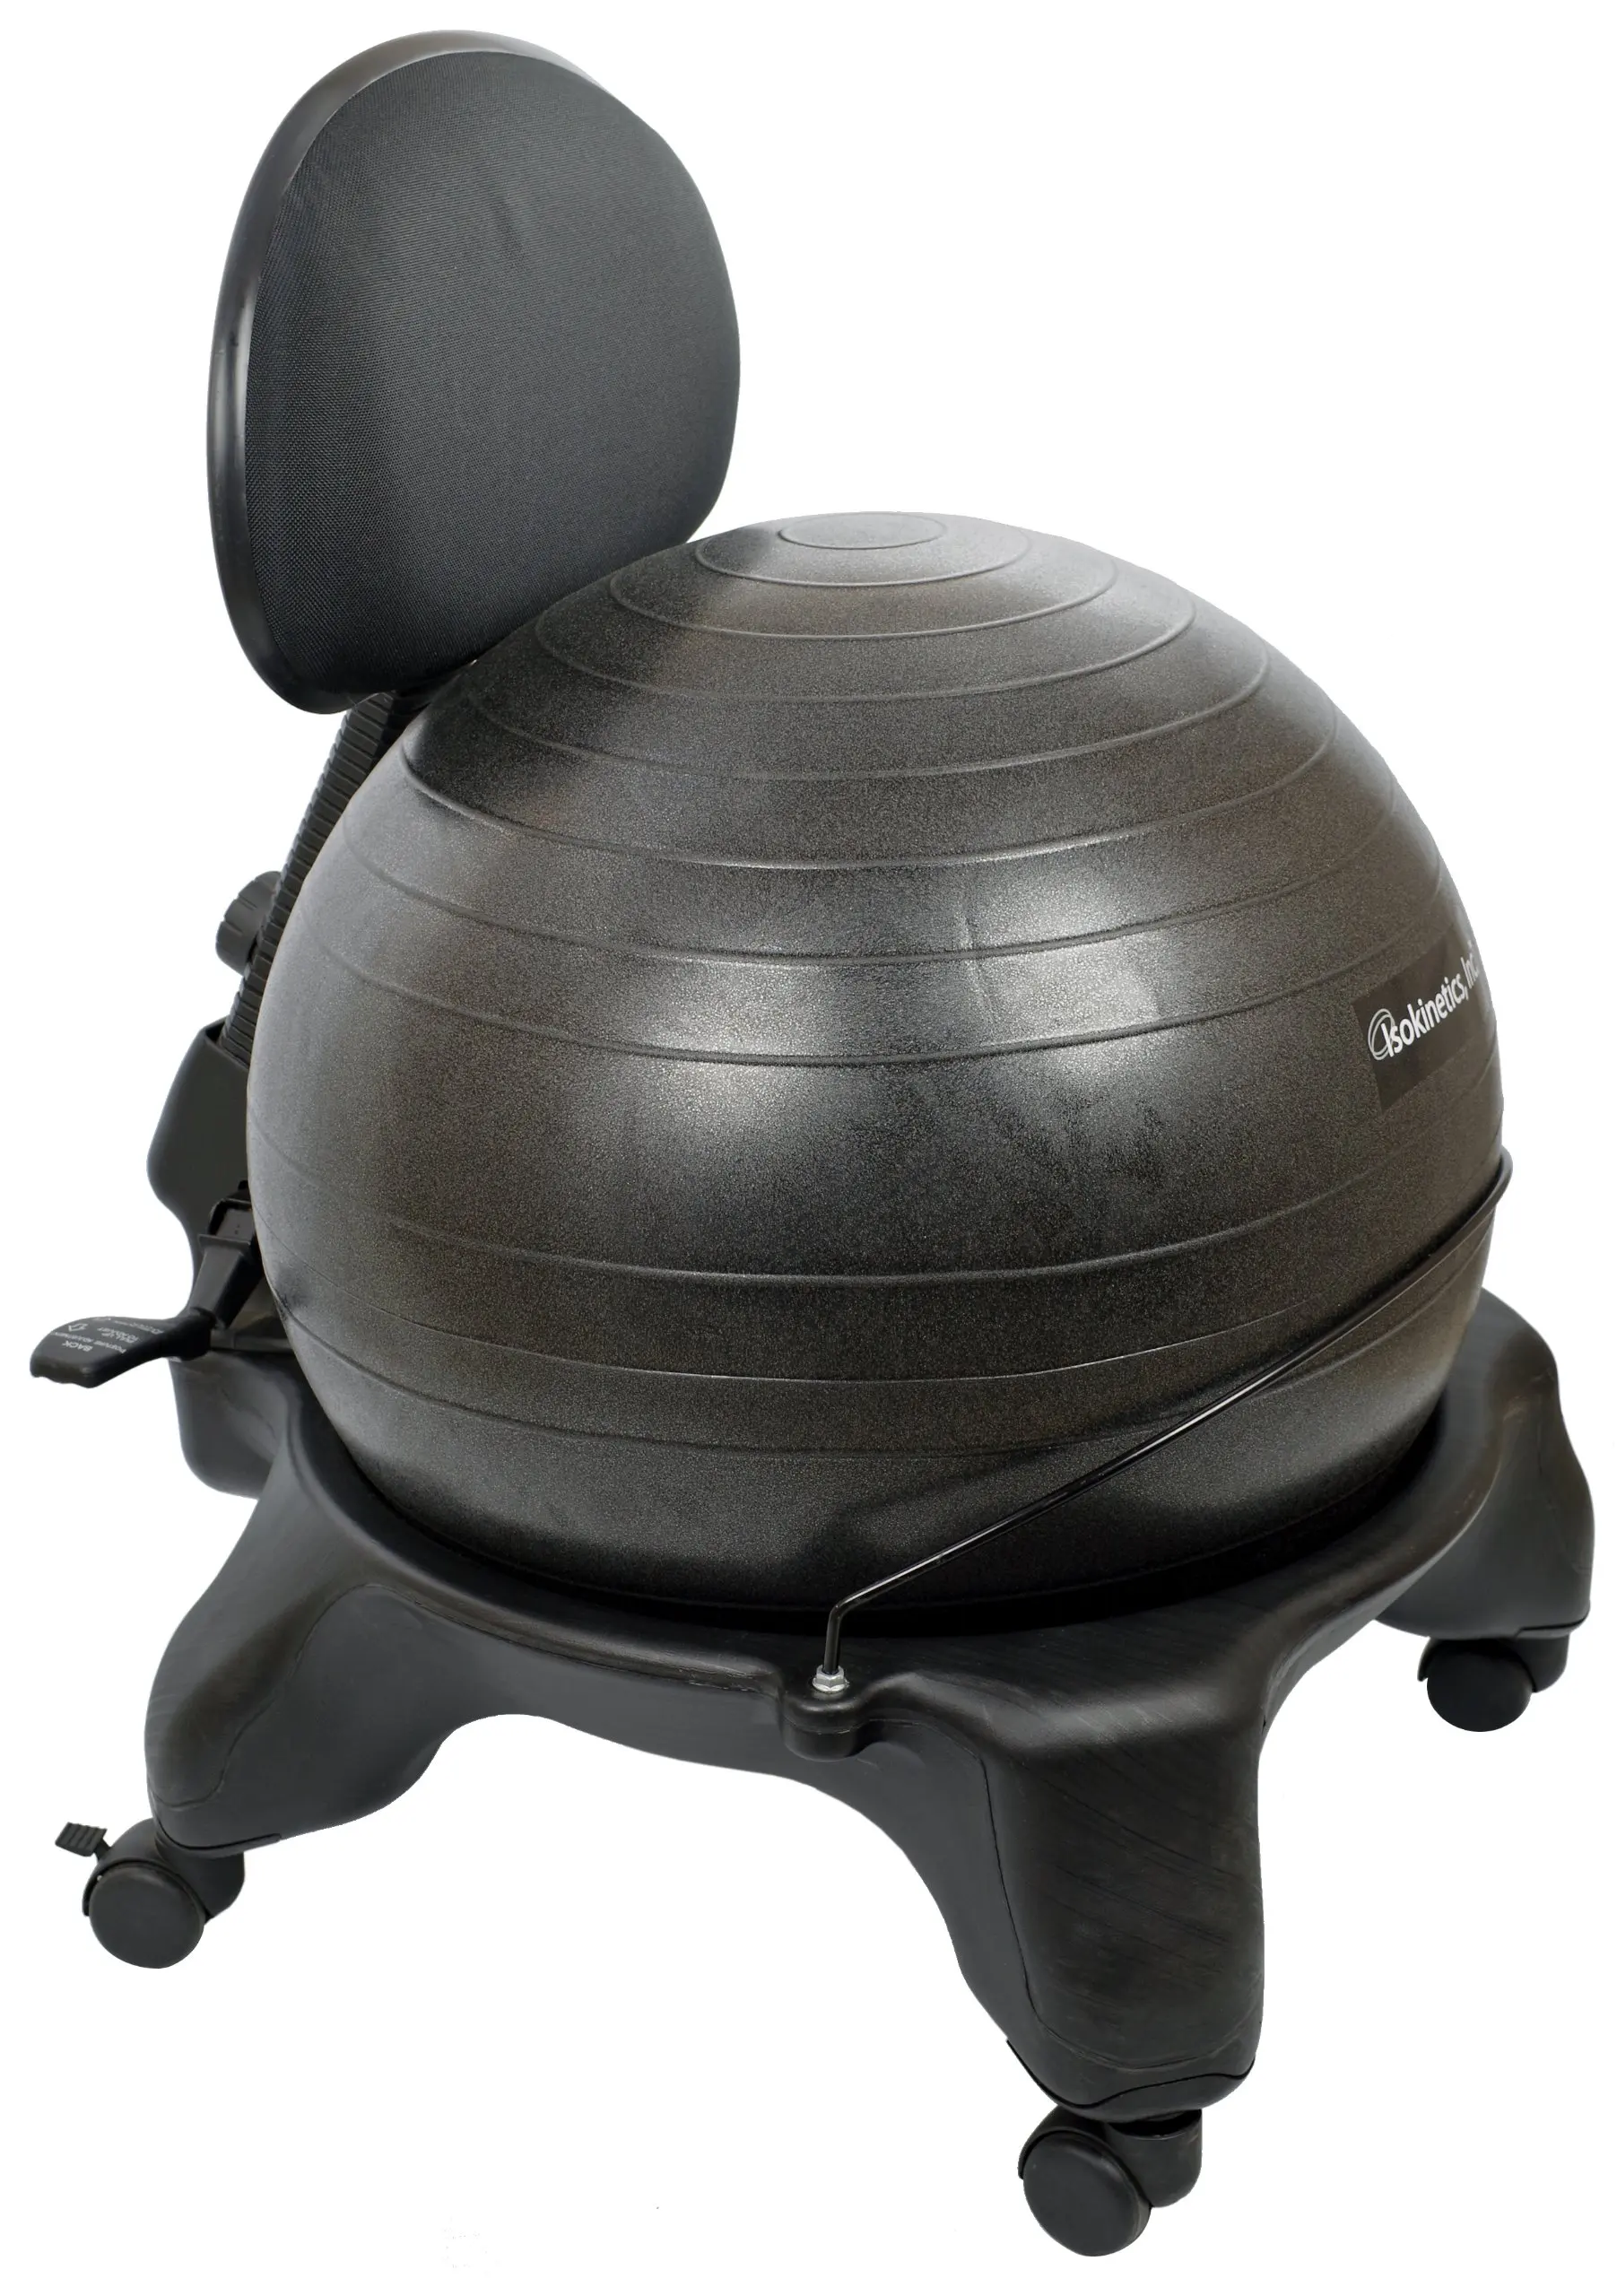 yoga ball office chair